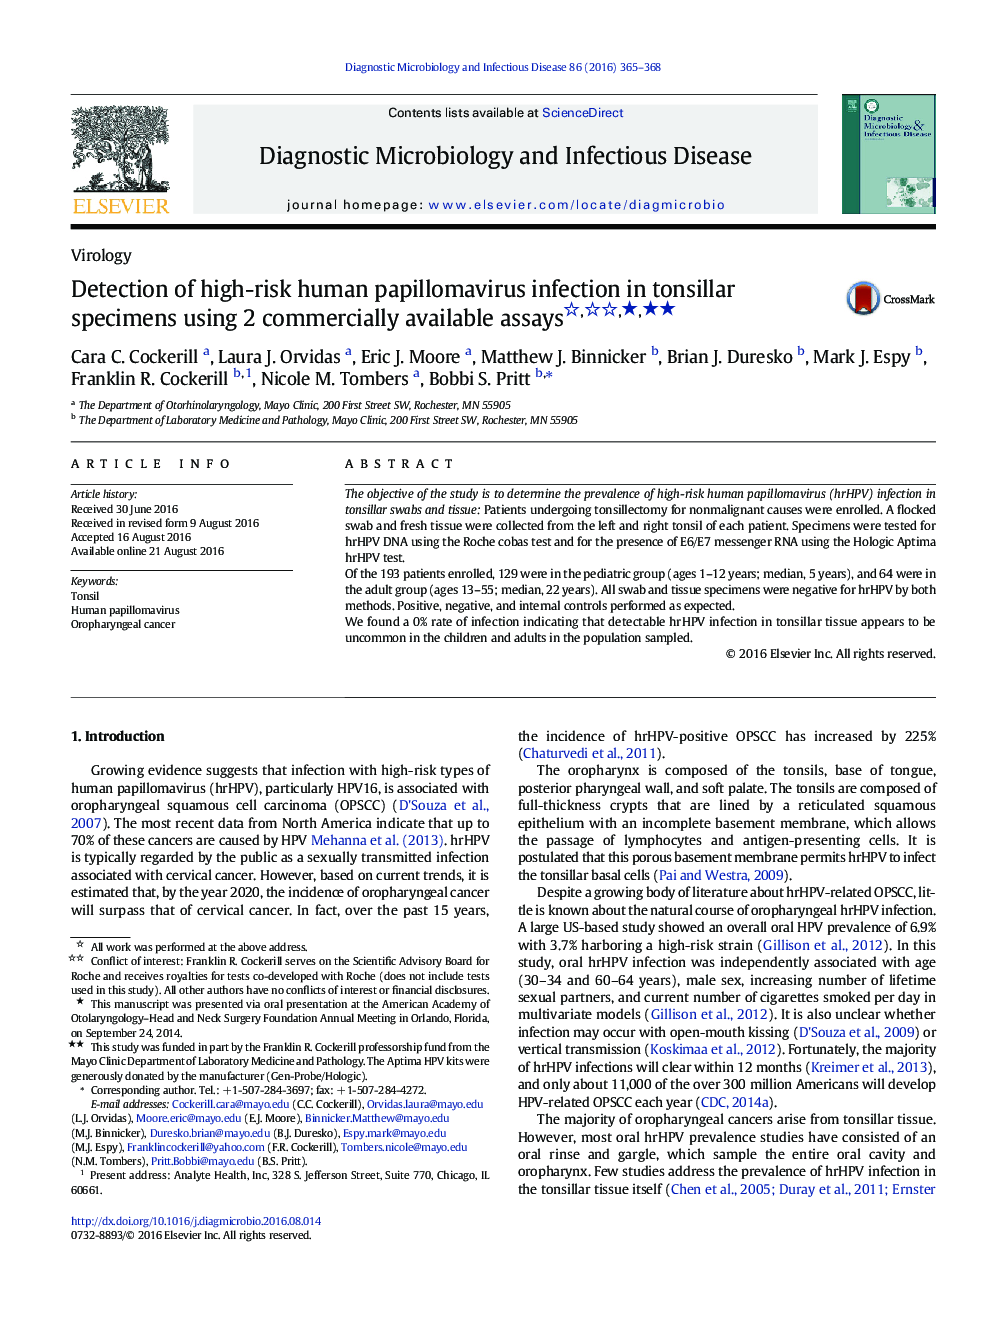 Detection of high-risk human papillomavirus infection in tonsillar specimens using 2 commercially available assaysâââ